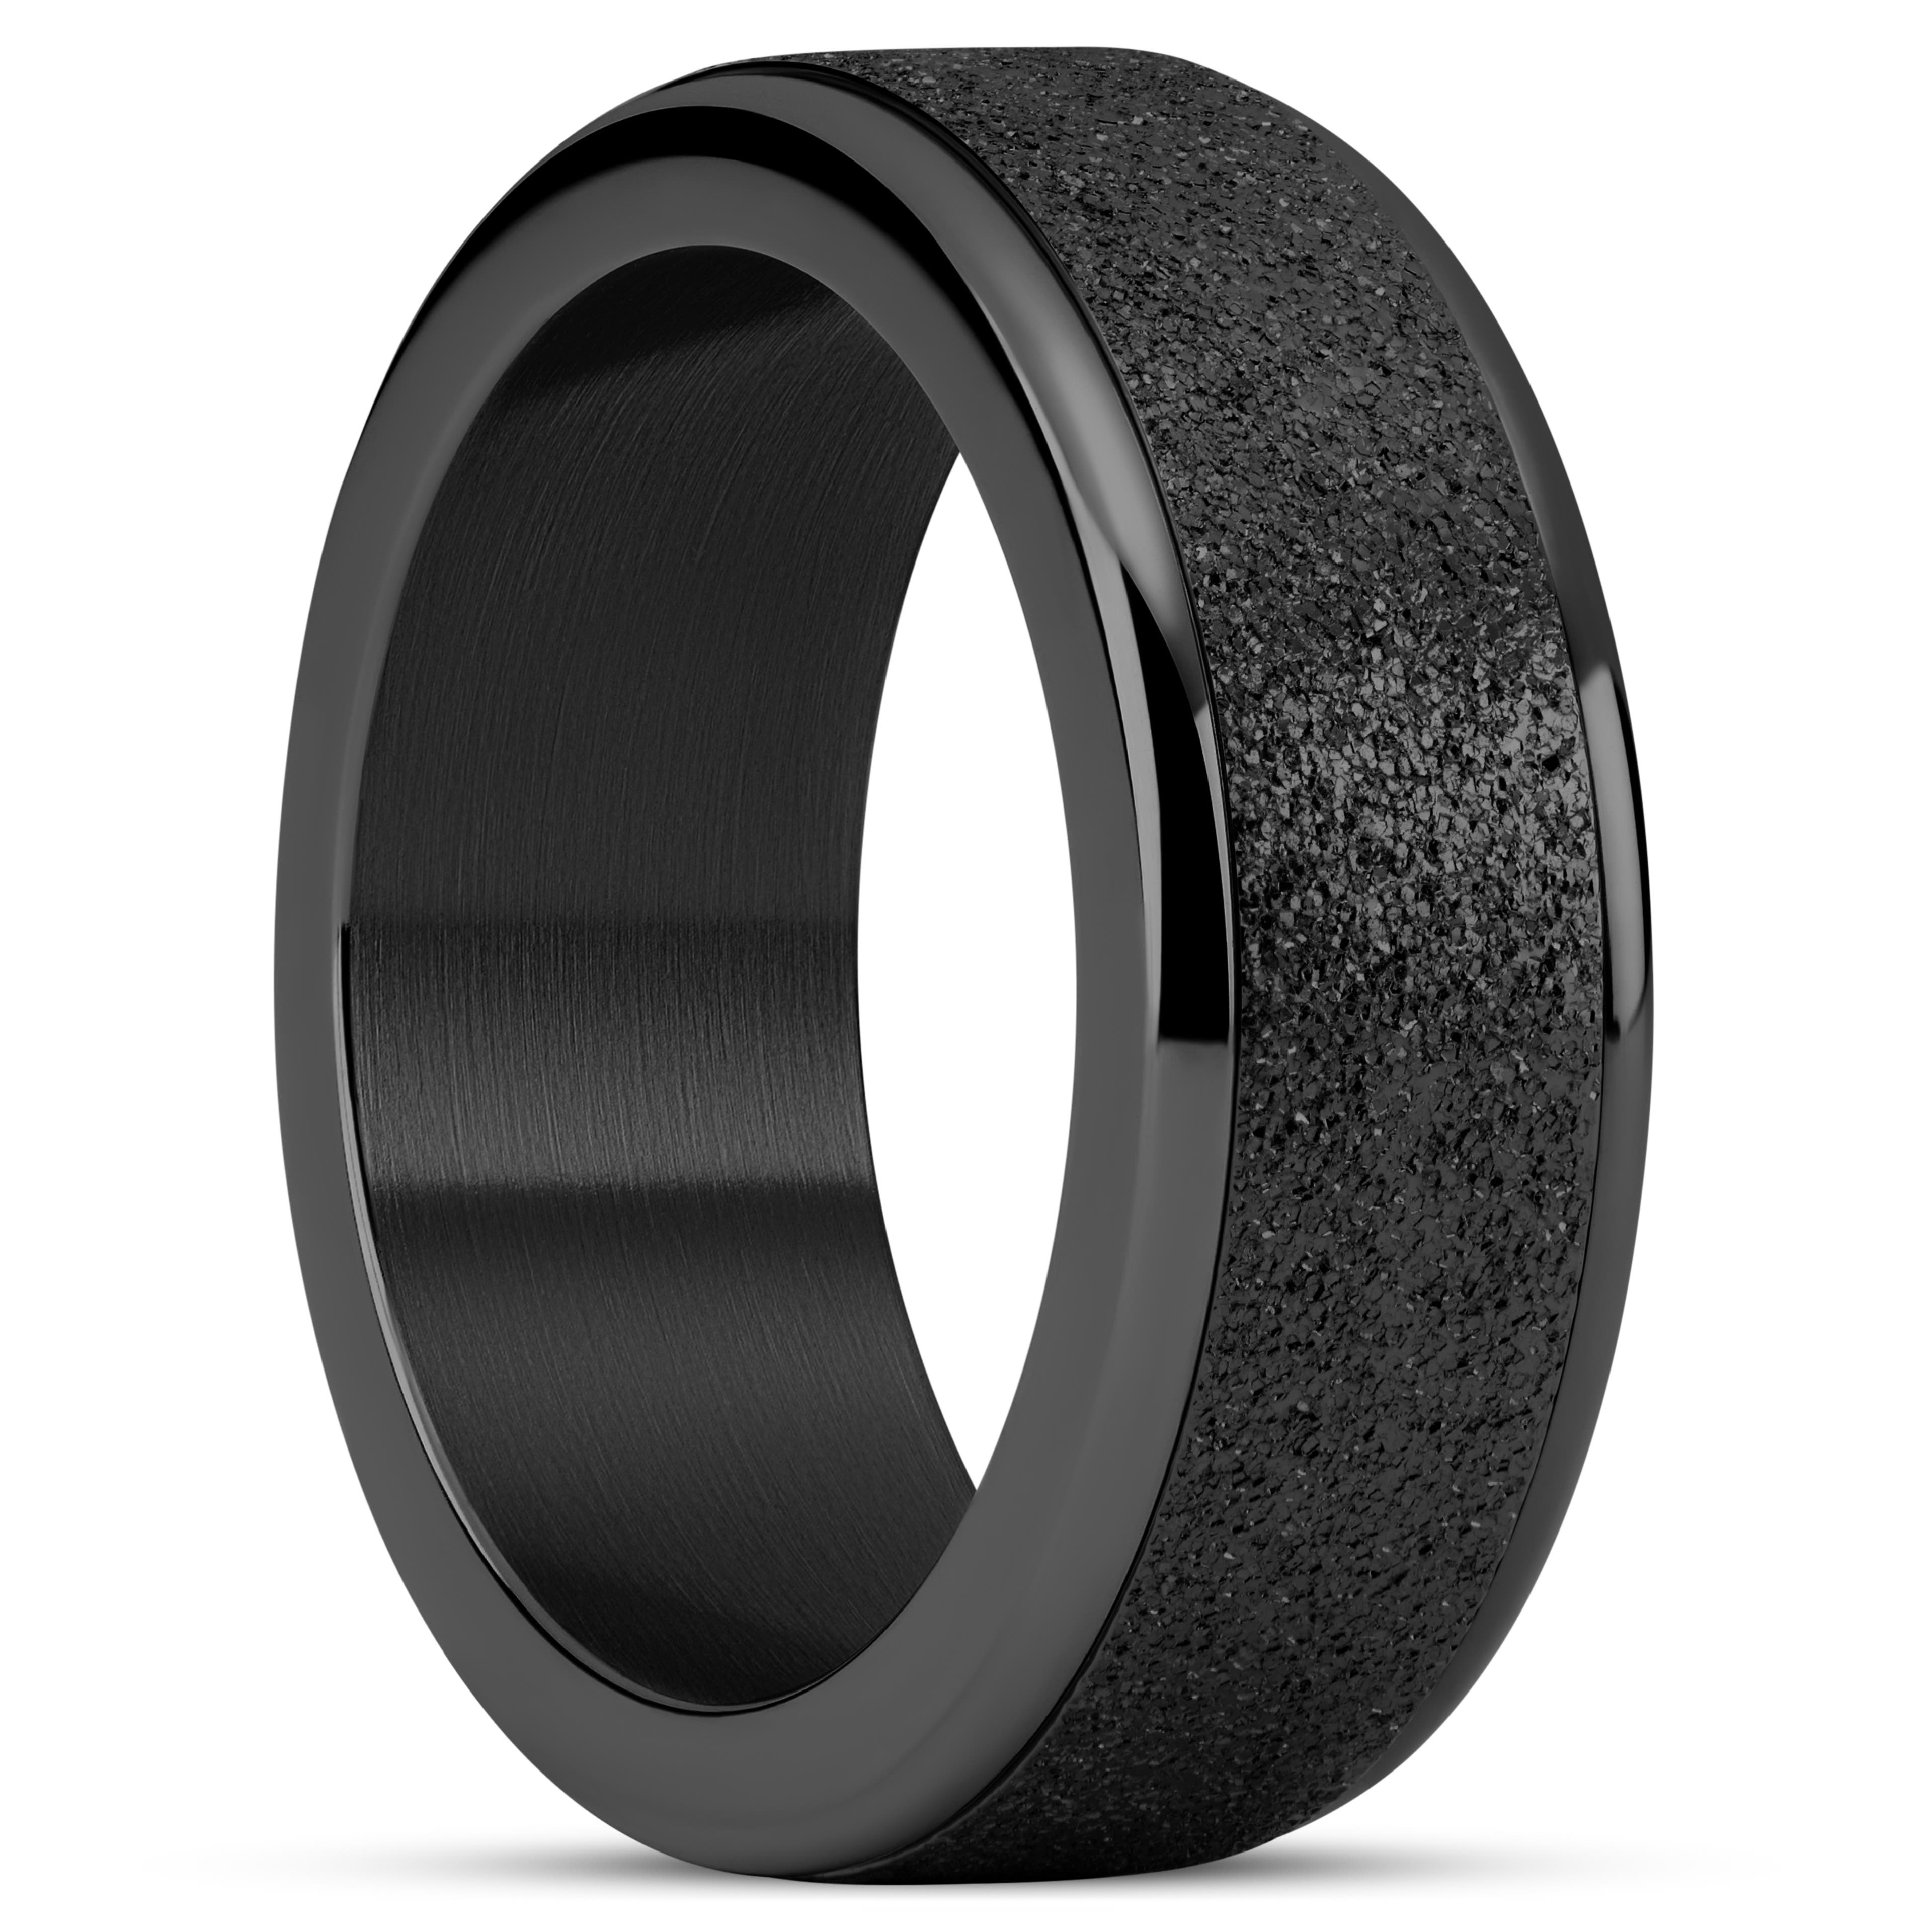 Enthumema | 1/3" (8 mm) Glittery Black Stainless Steel Fidget Ring